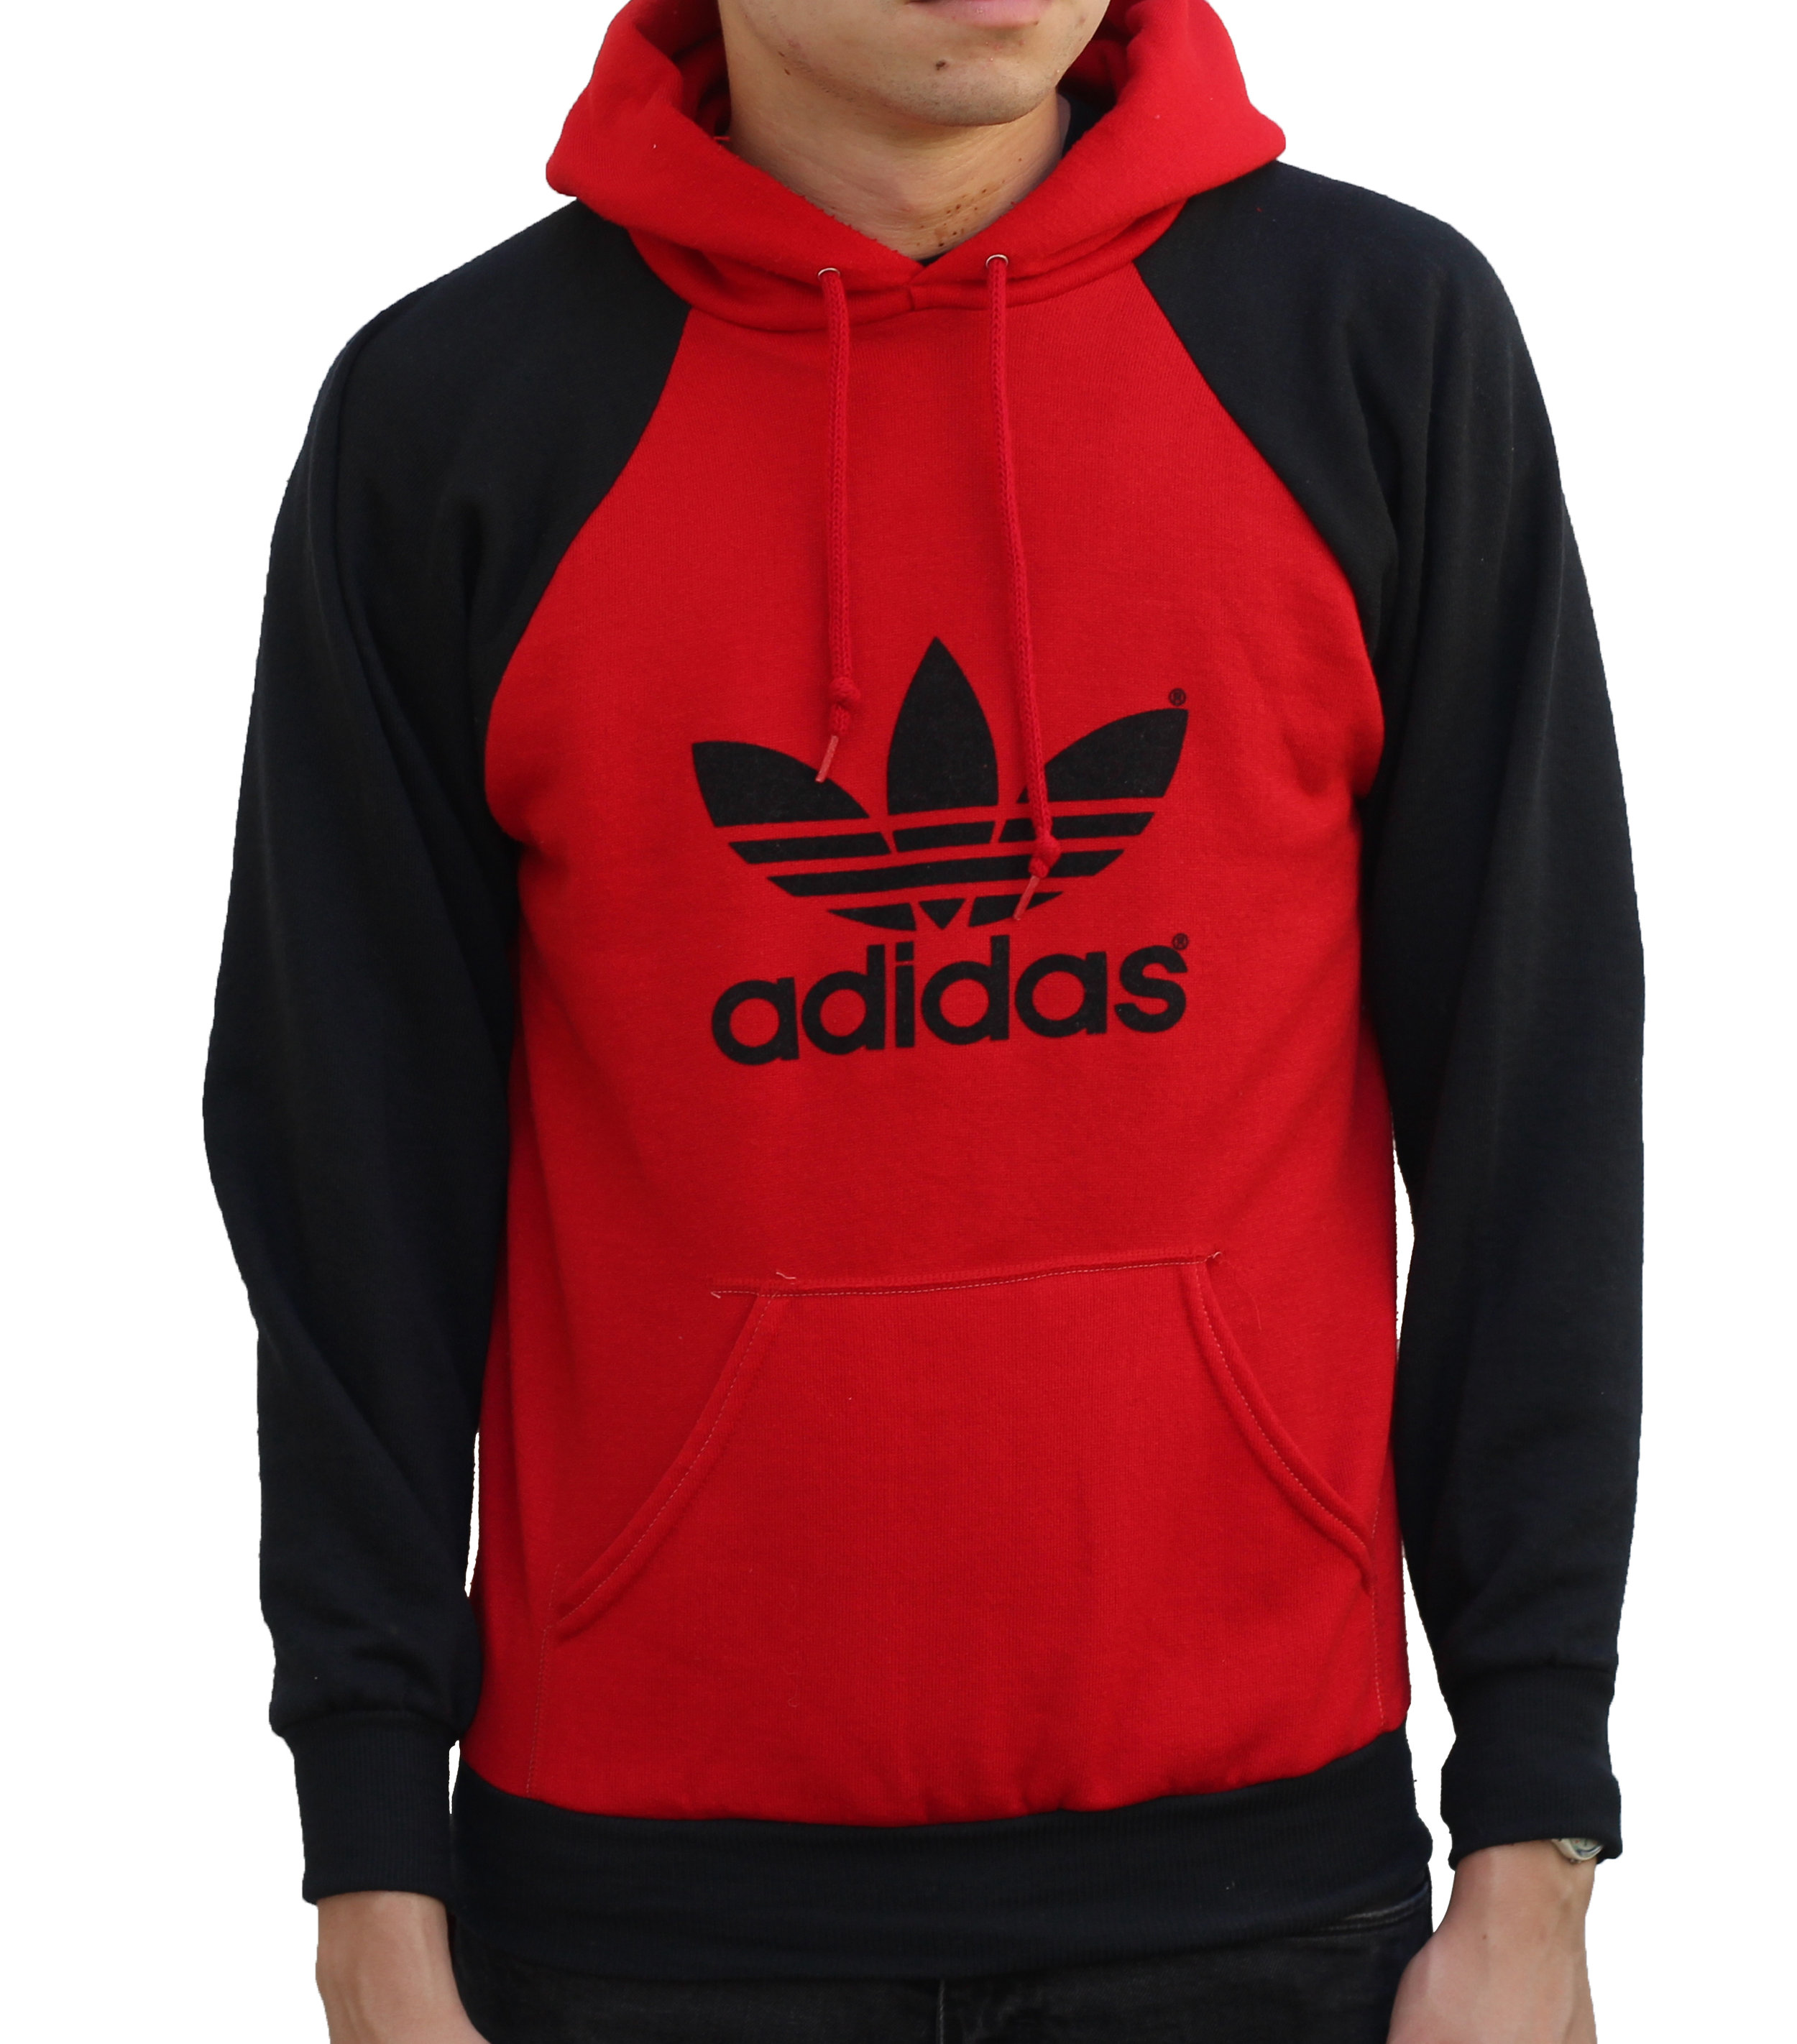 Excepcional Alternativa Seguir Adidas Hoodie Black Red on Sale, SAVE 38% - aveclumiere.com